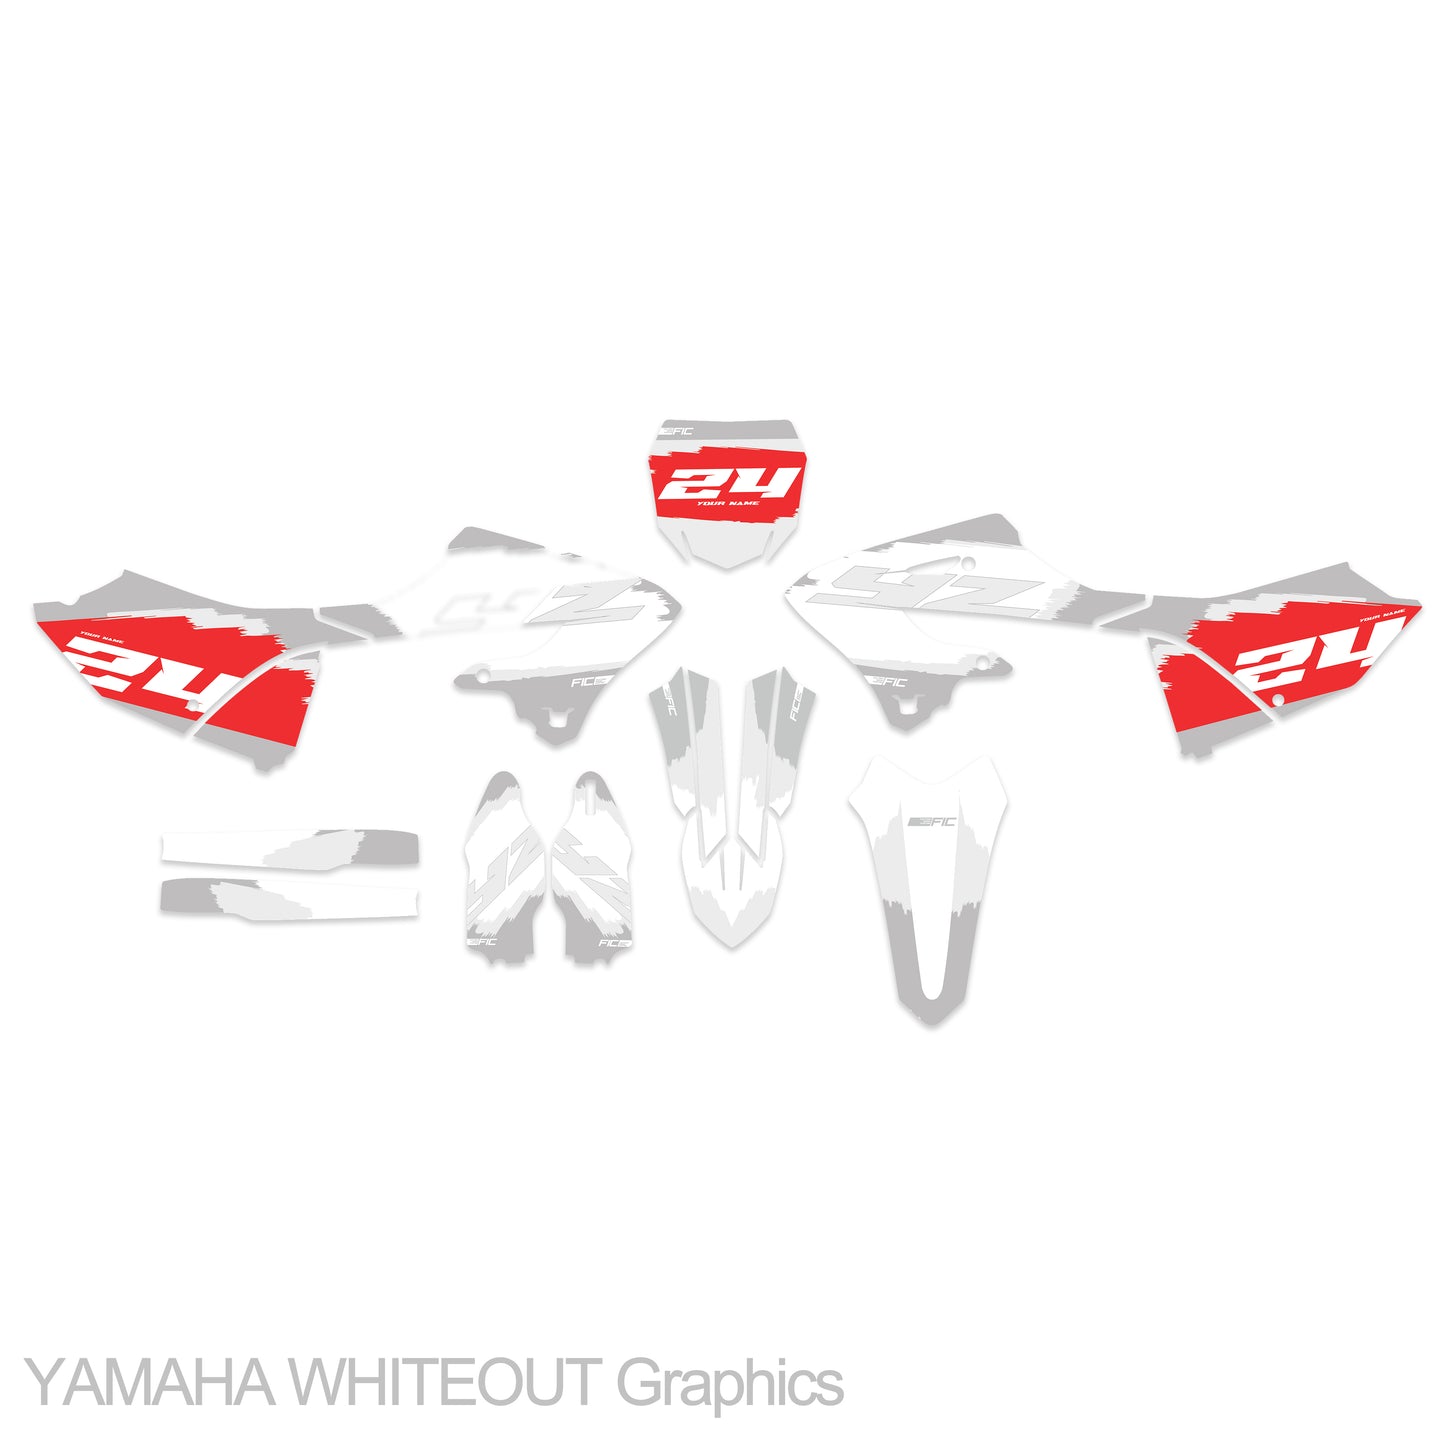 YAMAHA YZ 450F 2010 - 2013 WHITEOUT Graphics kit